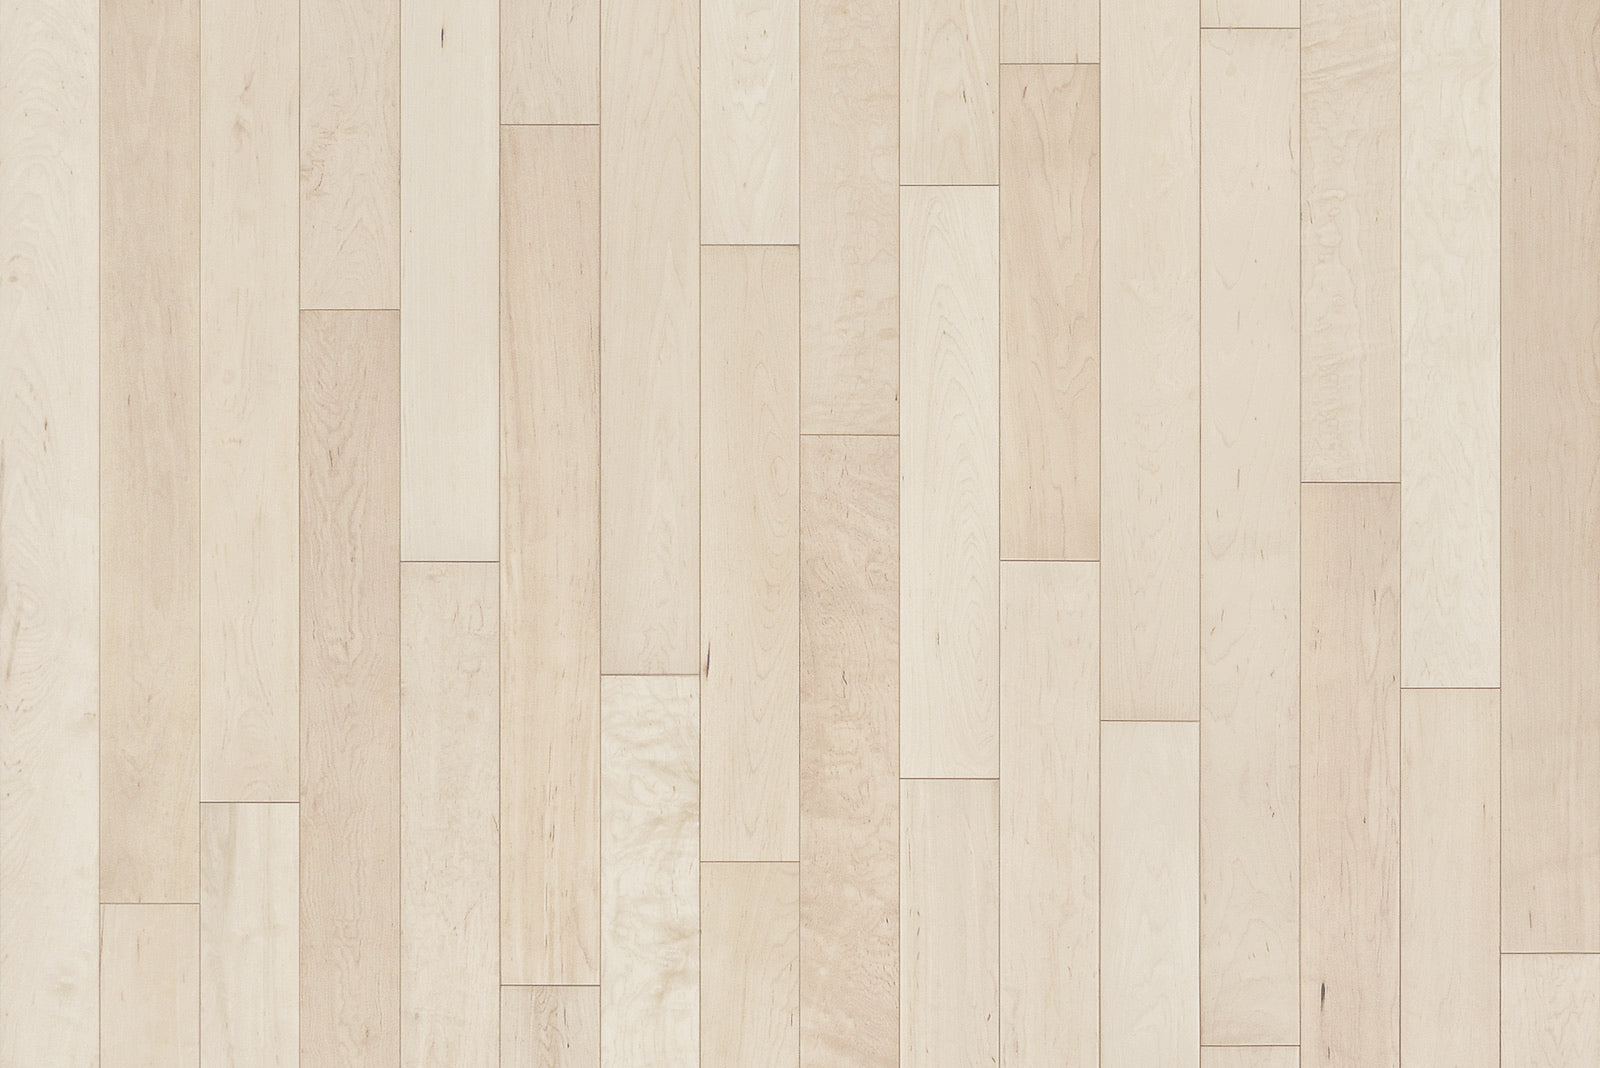 light wood flooring texture seamless